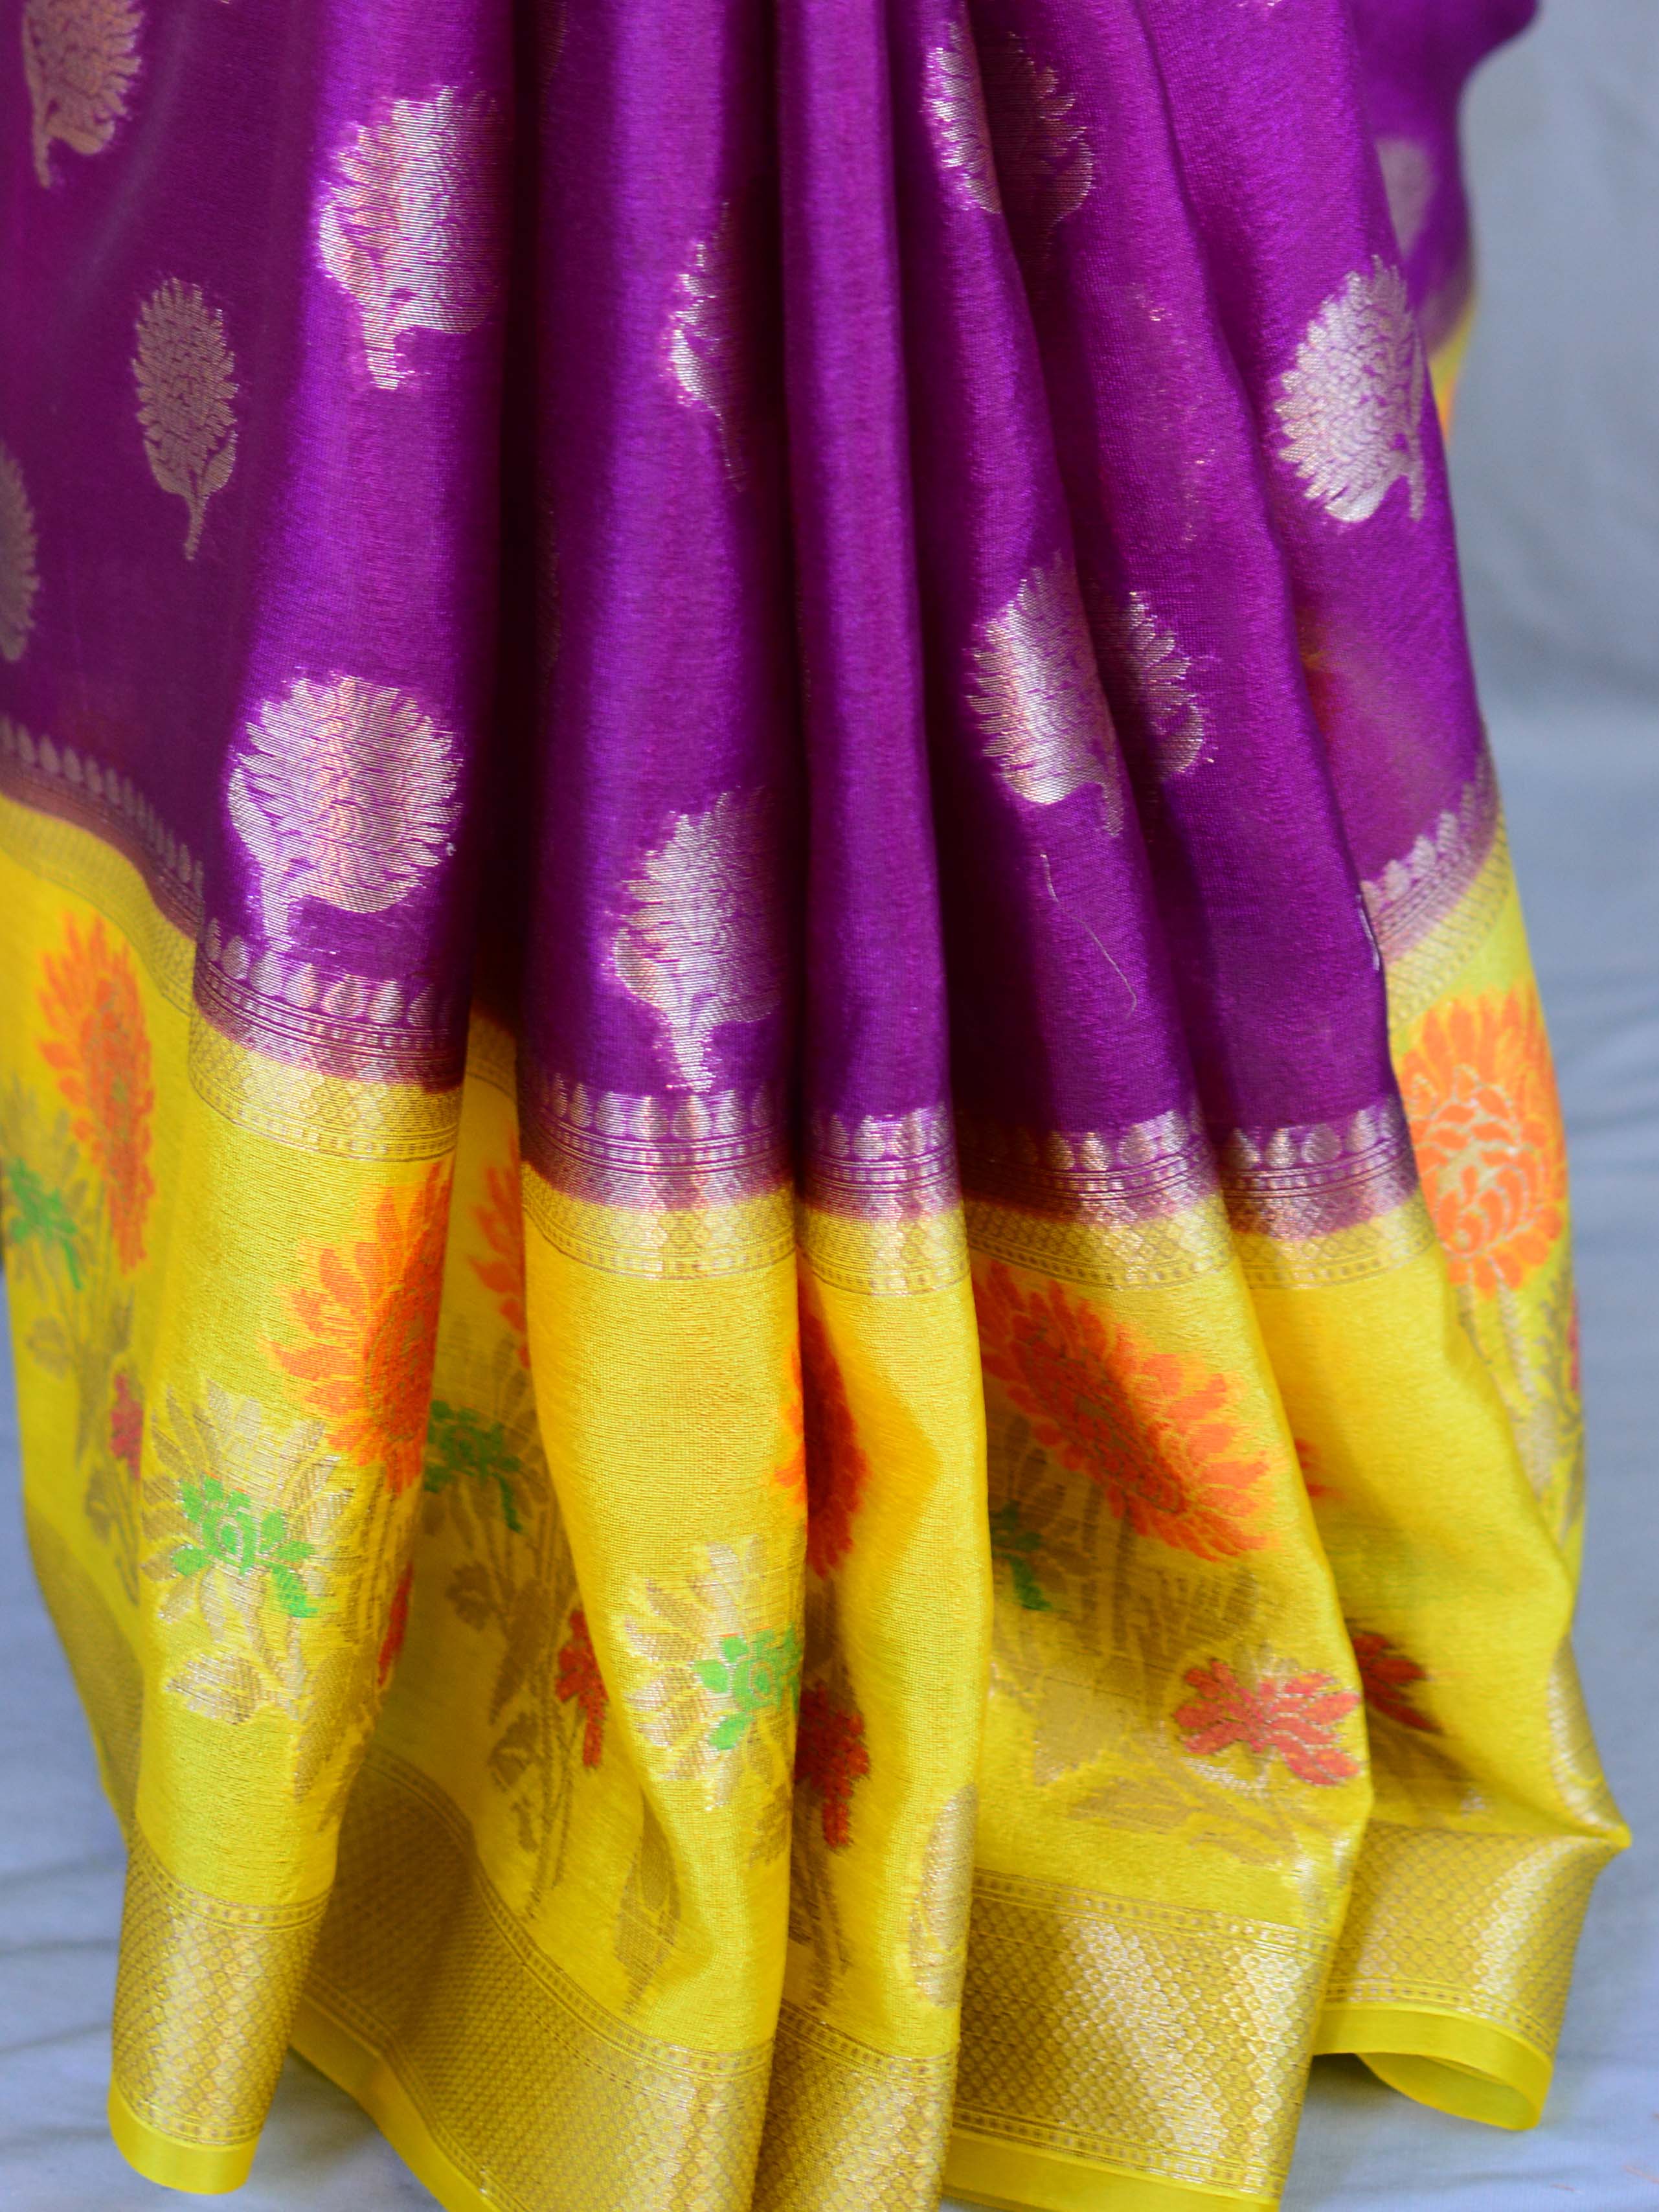 Banarasee Handwoven Semi-Chiffon Saree With Zari Buta & Contrast Border-Violet